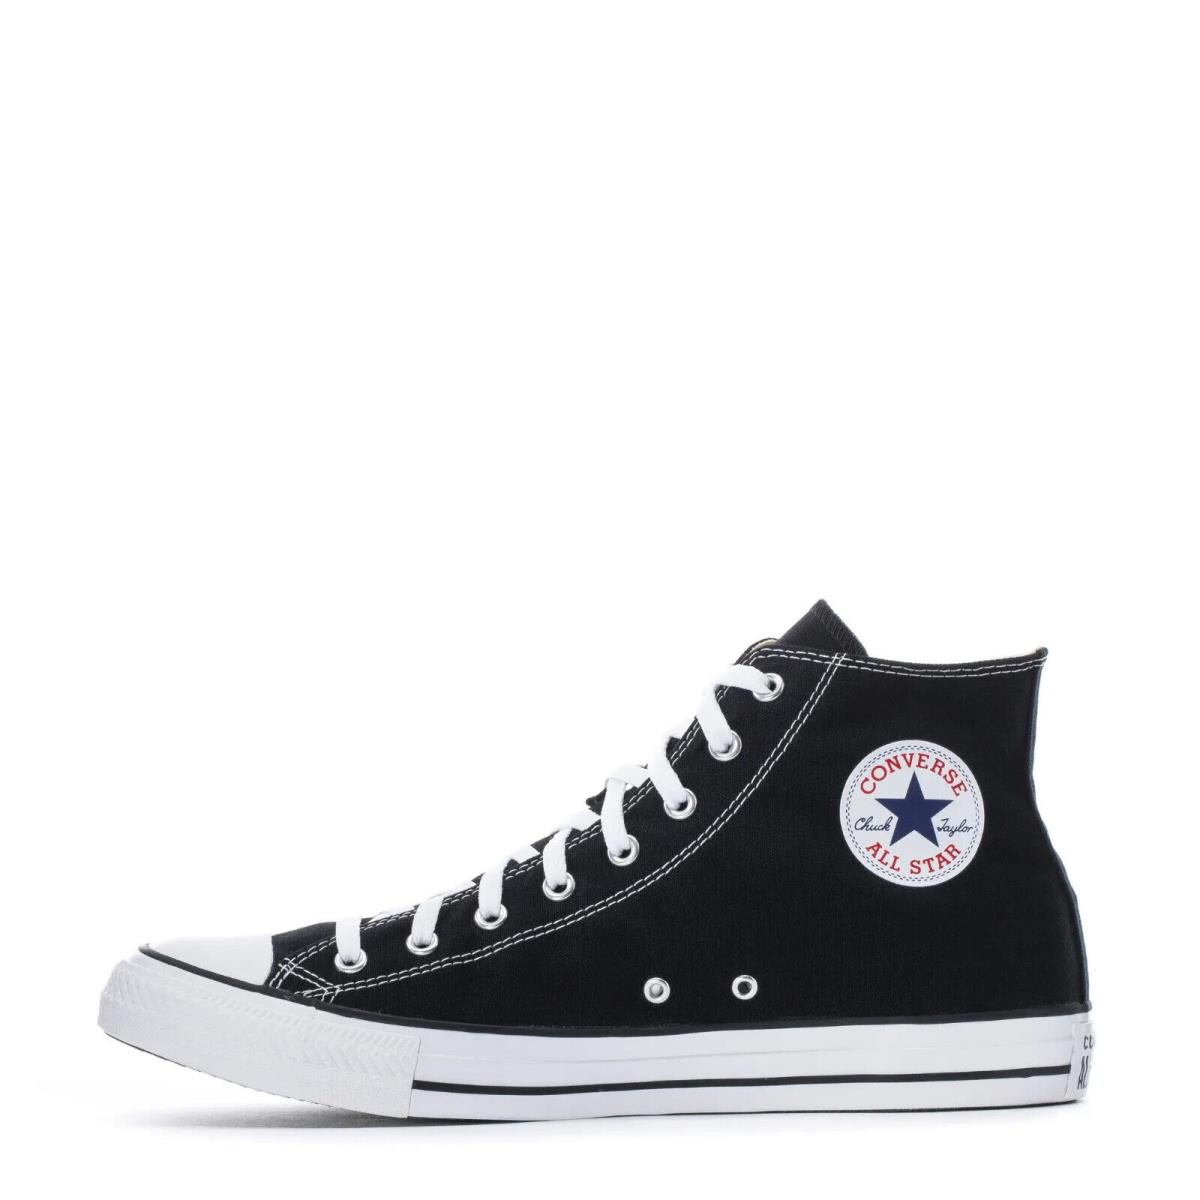 Converse Chuck Taylor HI Core Black White HI Top Casual Athletic Sneakers